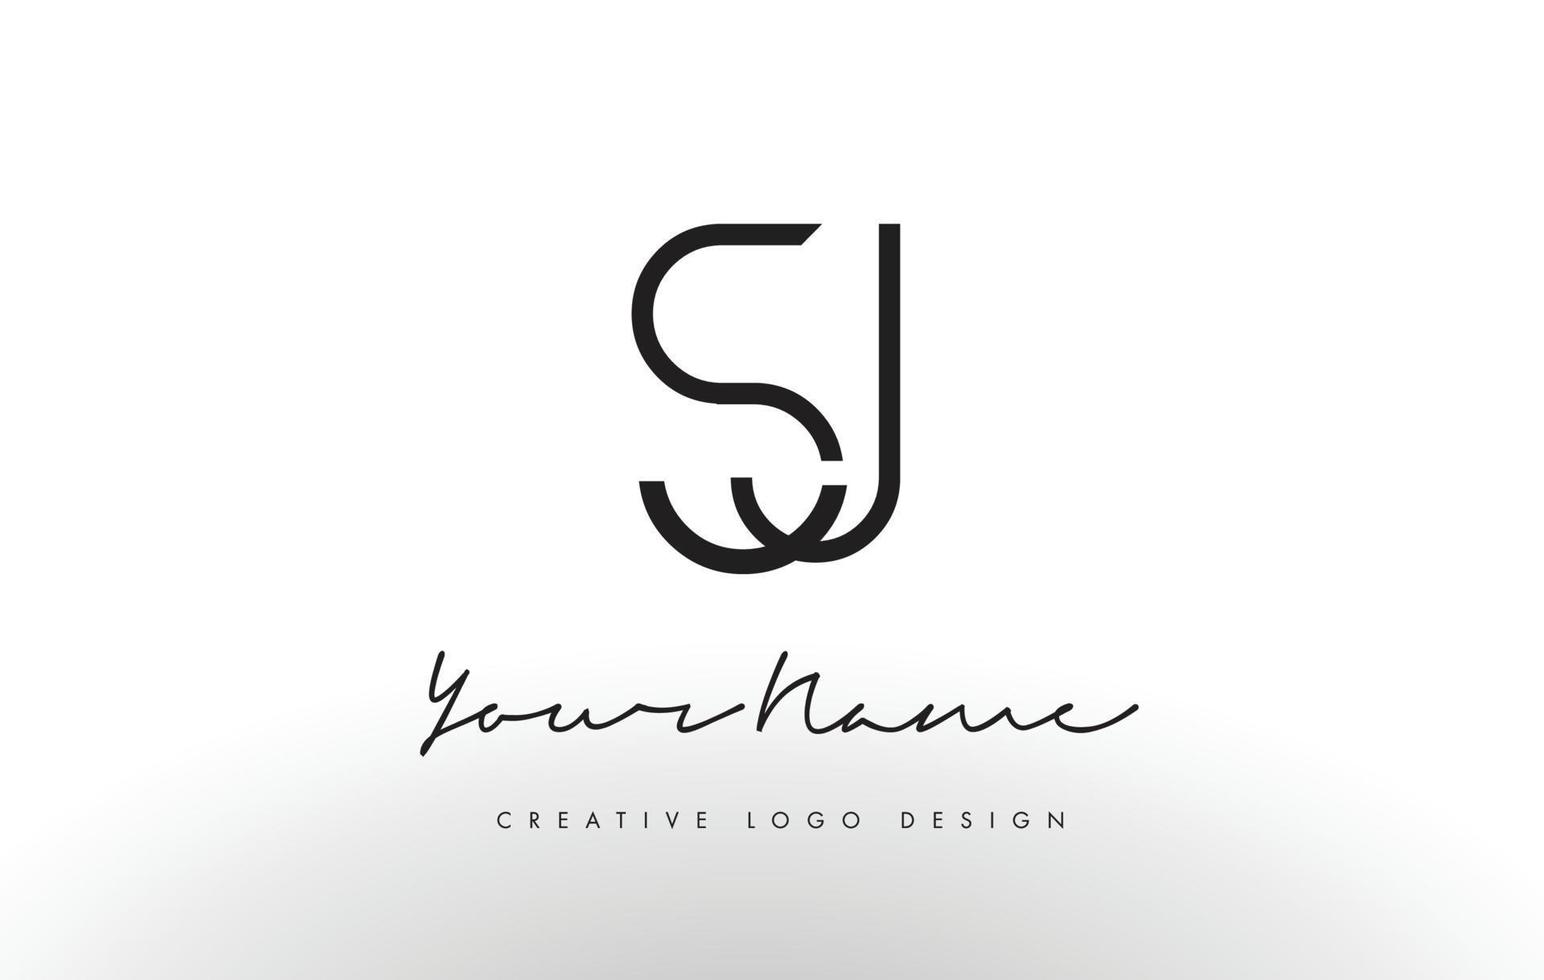 Diseño de logotipo de letras sj delgado. concepto creativo simple letra negra. vector